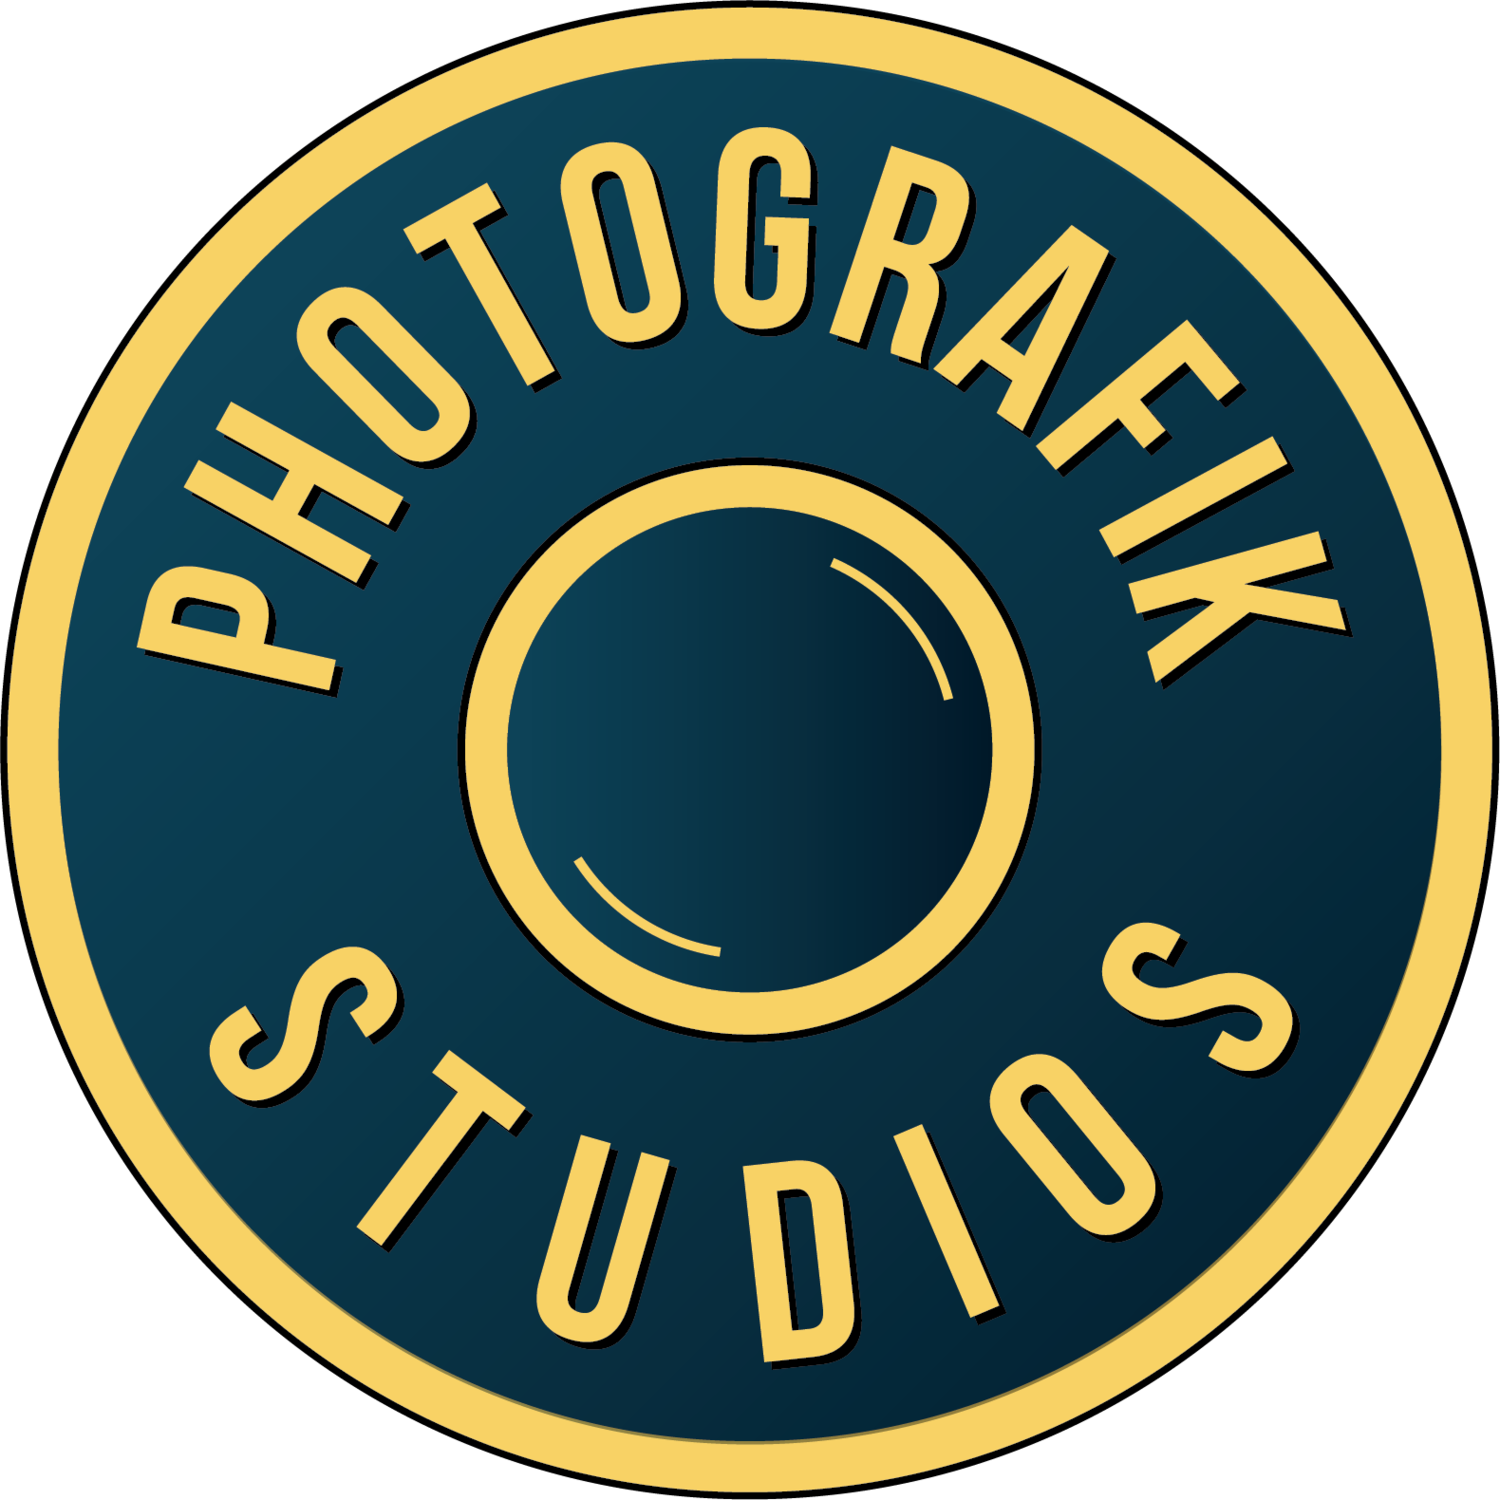 Photografik Studios